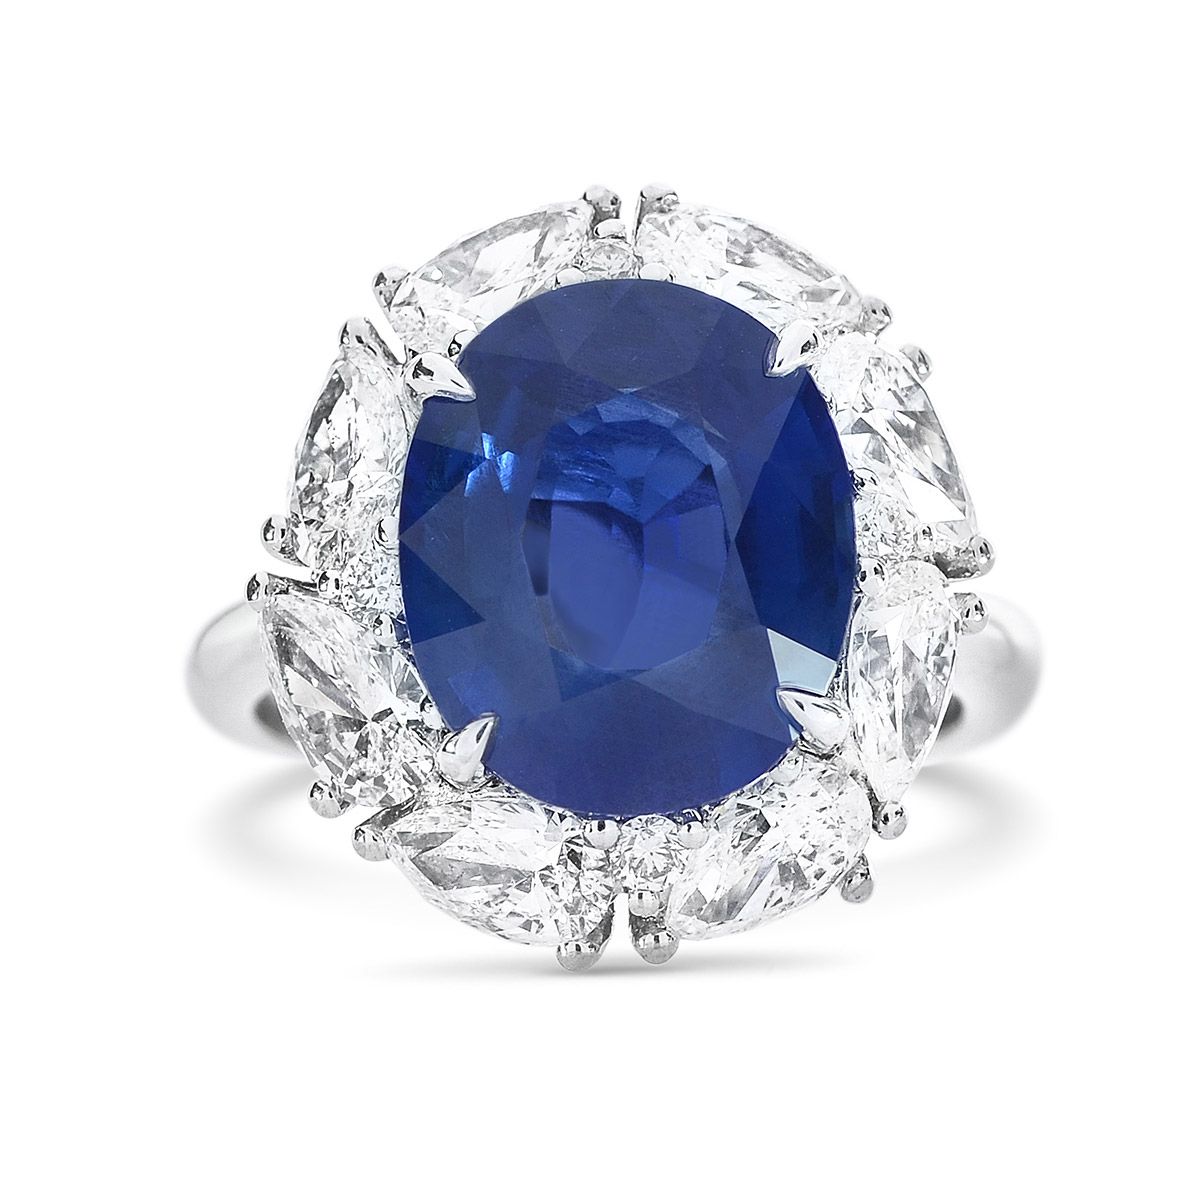 Natural Vivid Blue Burma Sapphire Ring, 6.67 Carat, GRS Certified, GRS2017-022147, Unheated